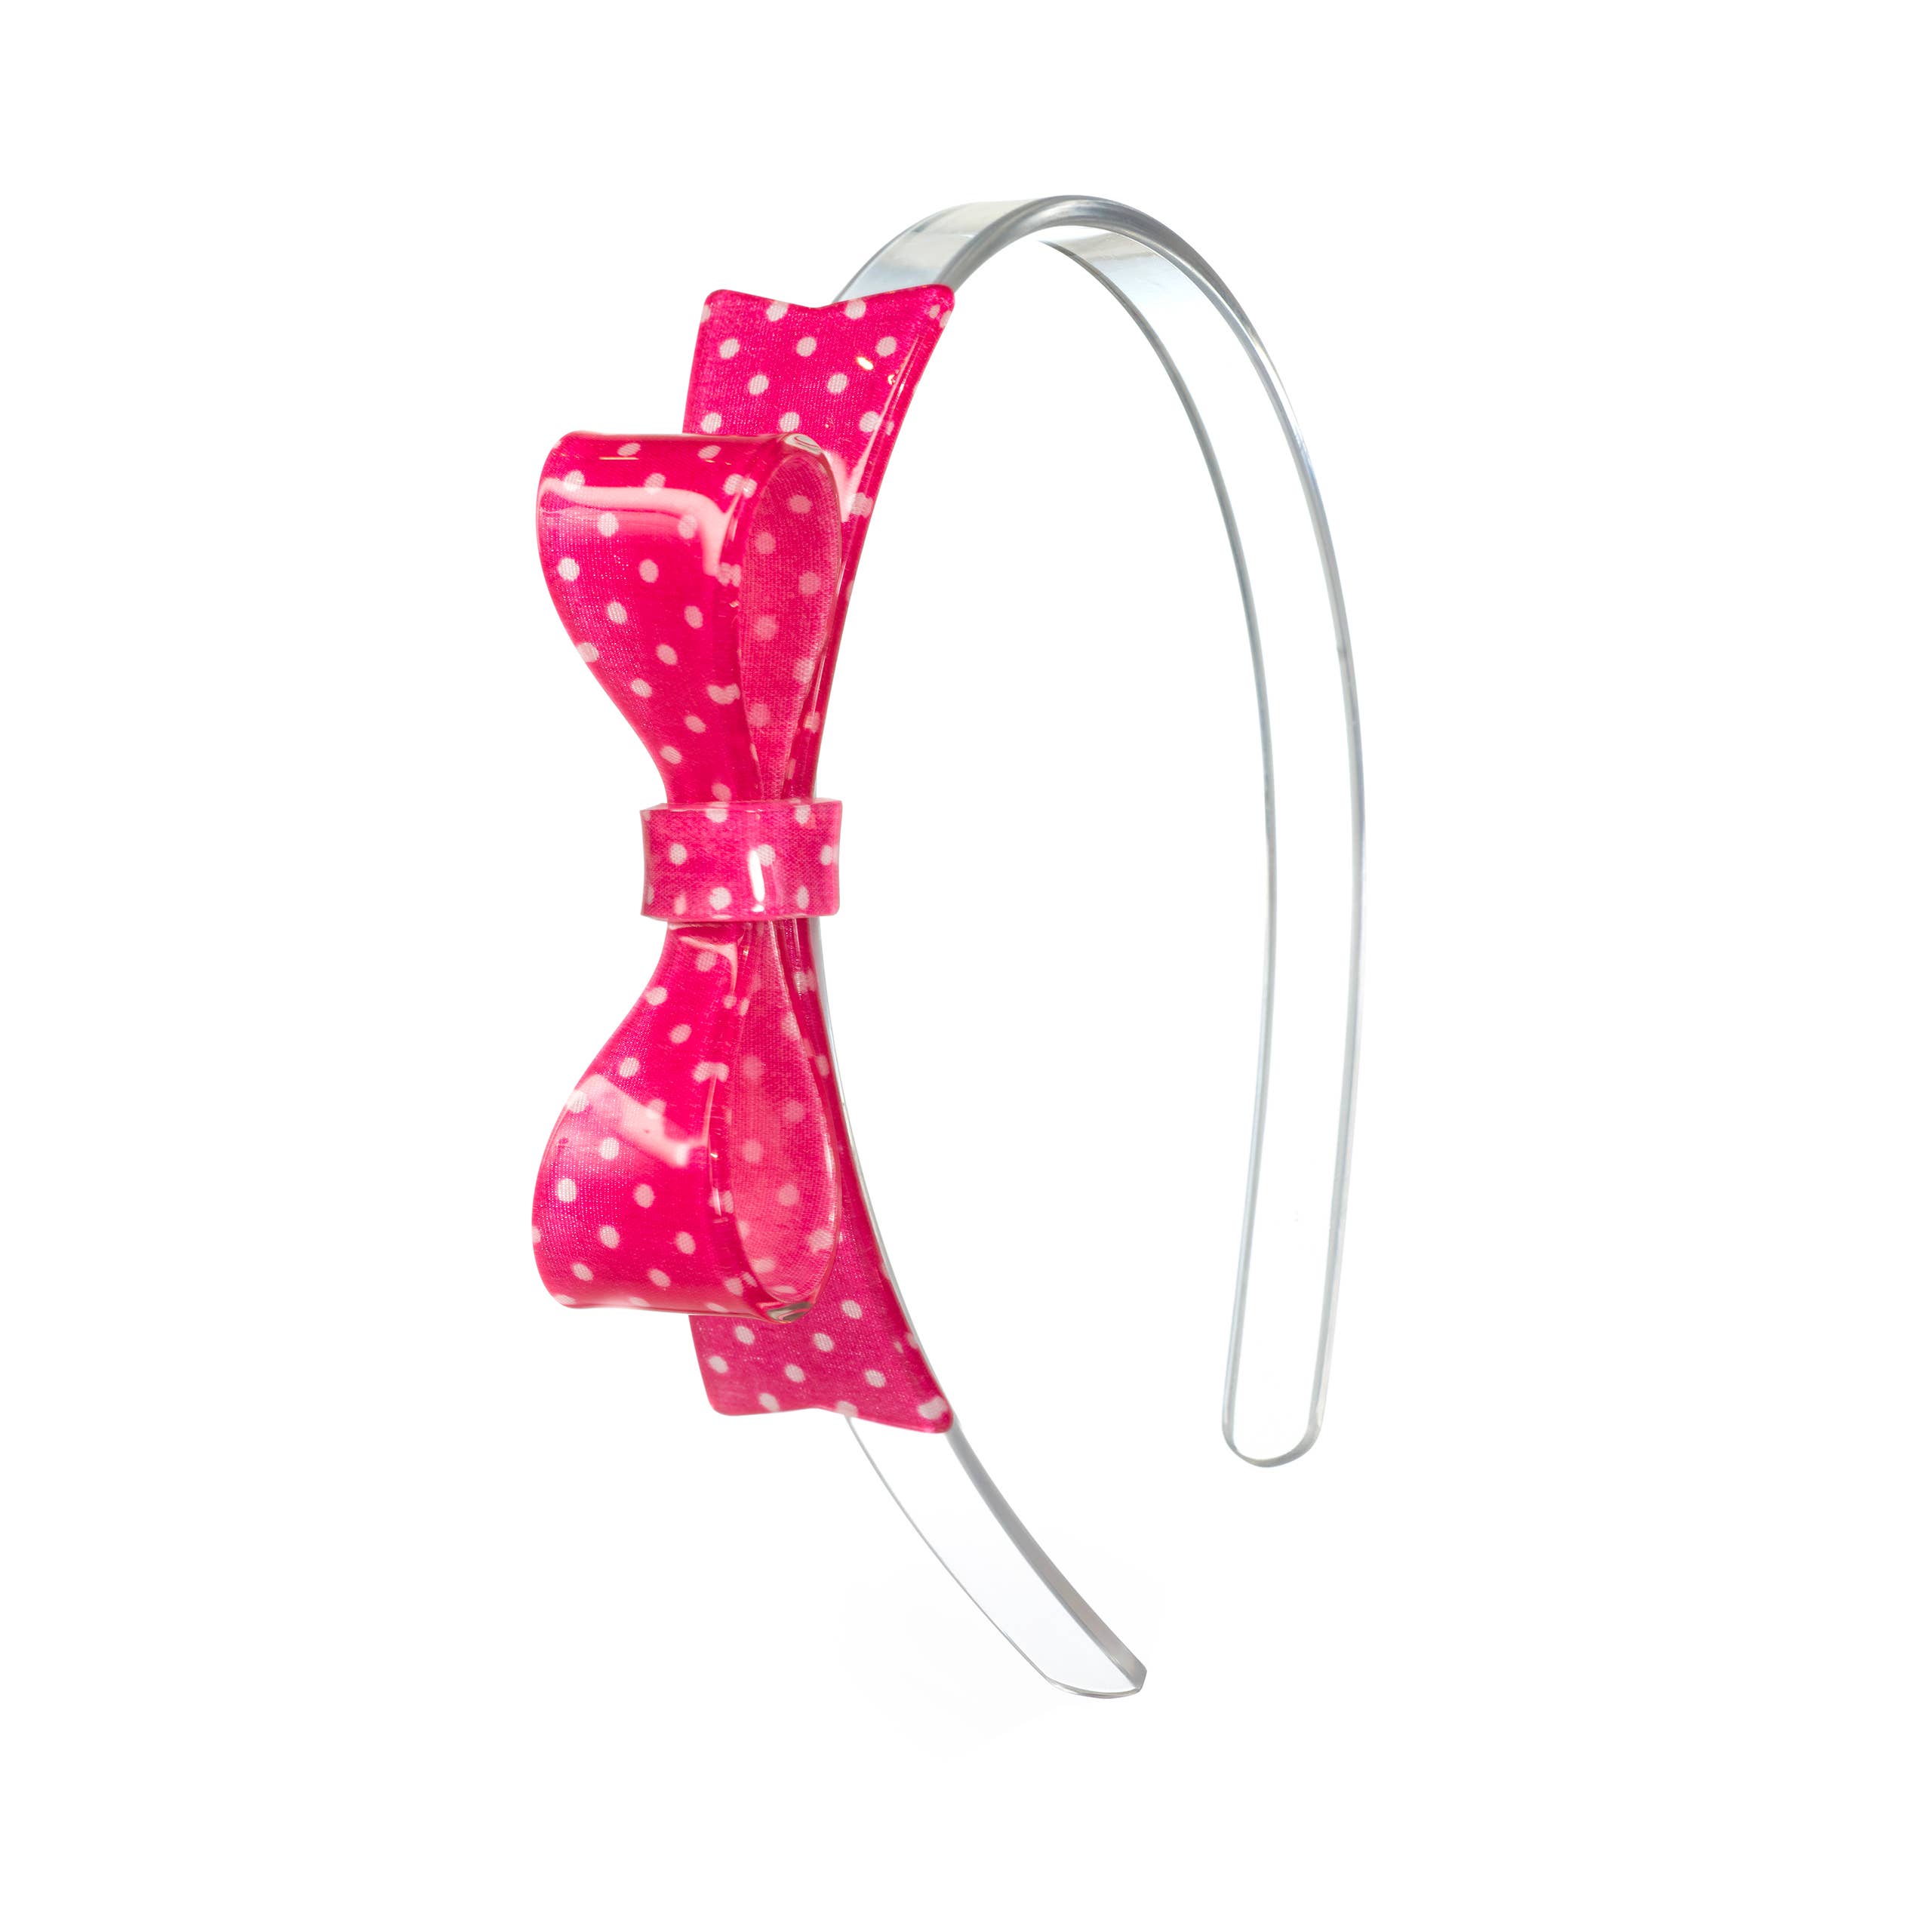 Polka Dot Bowtie Headband - Pink with White